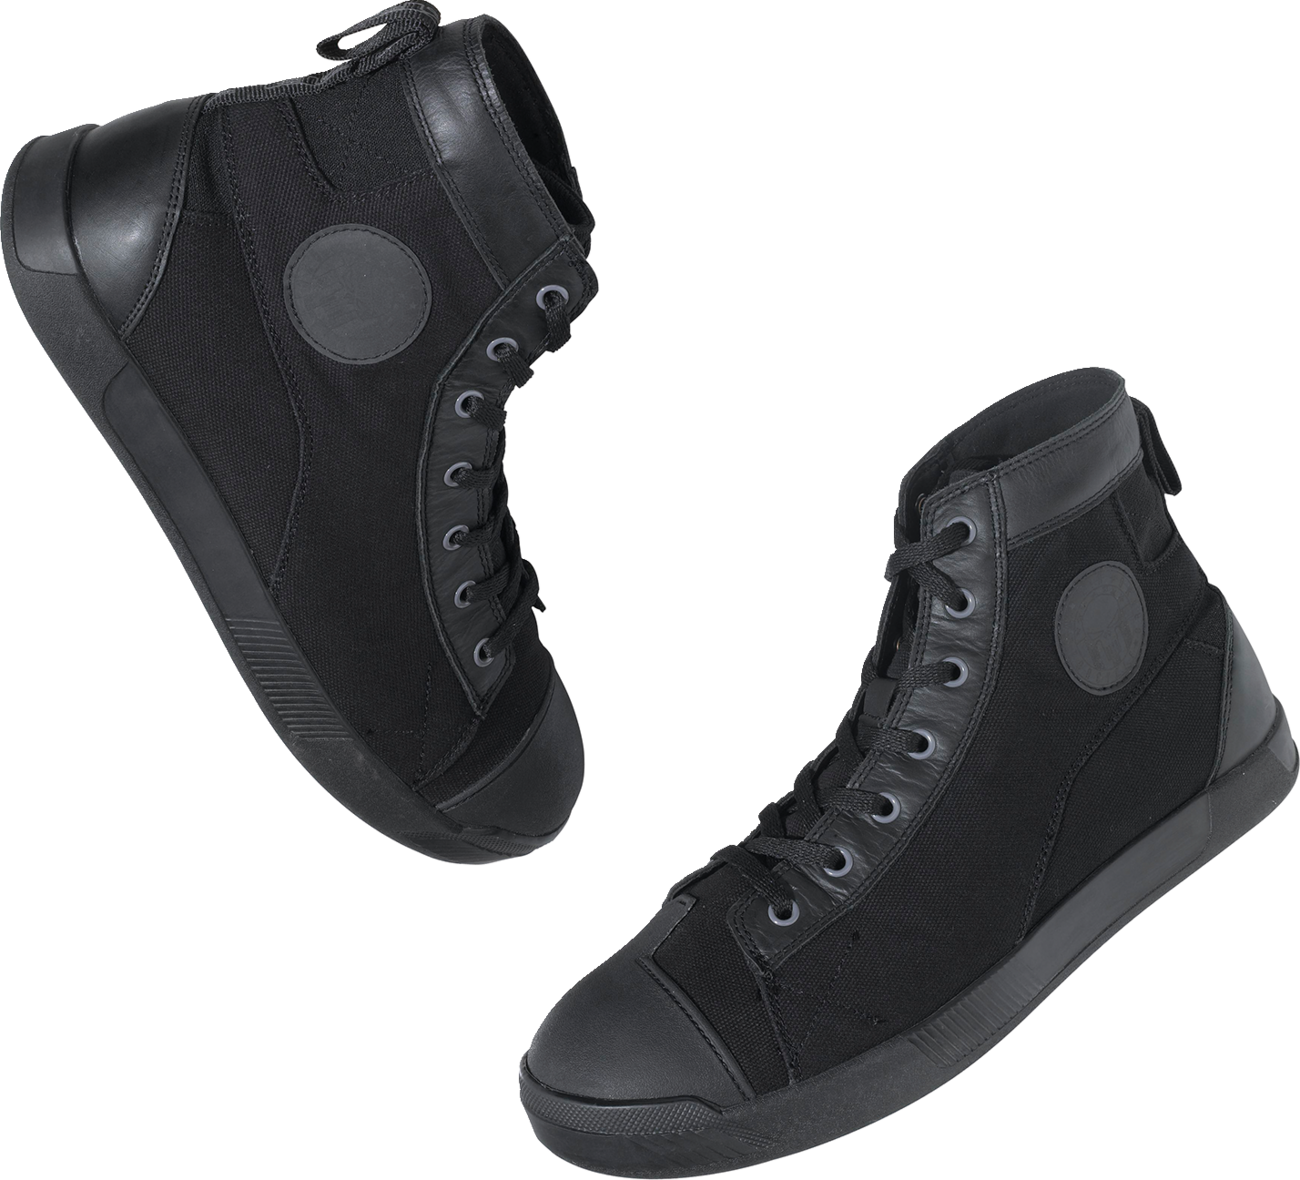 Z1R Haggard Boots - Black - US 7 3401-0952